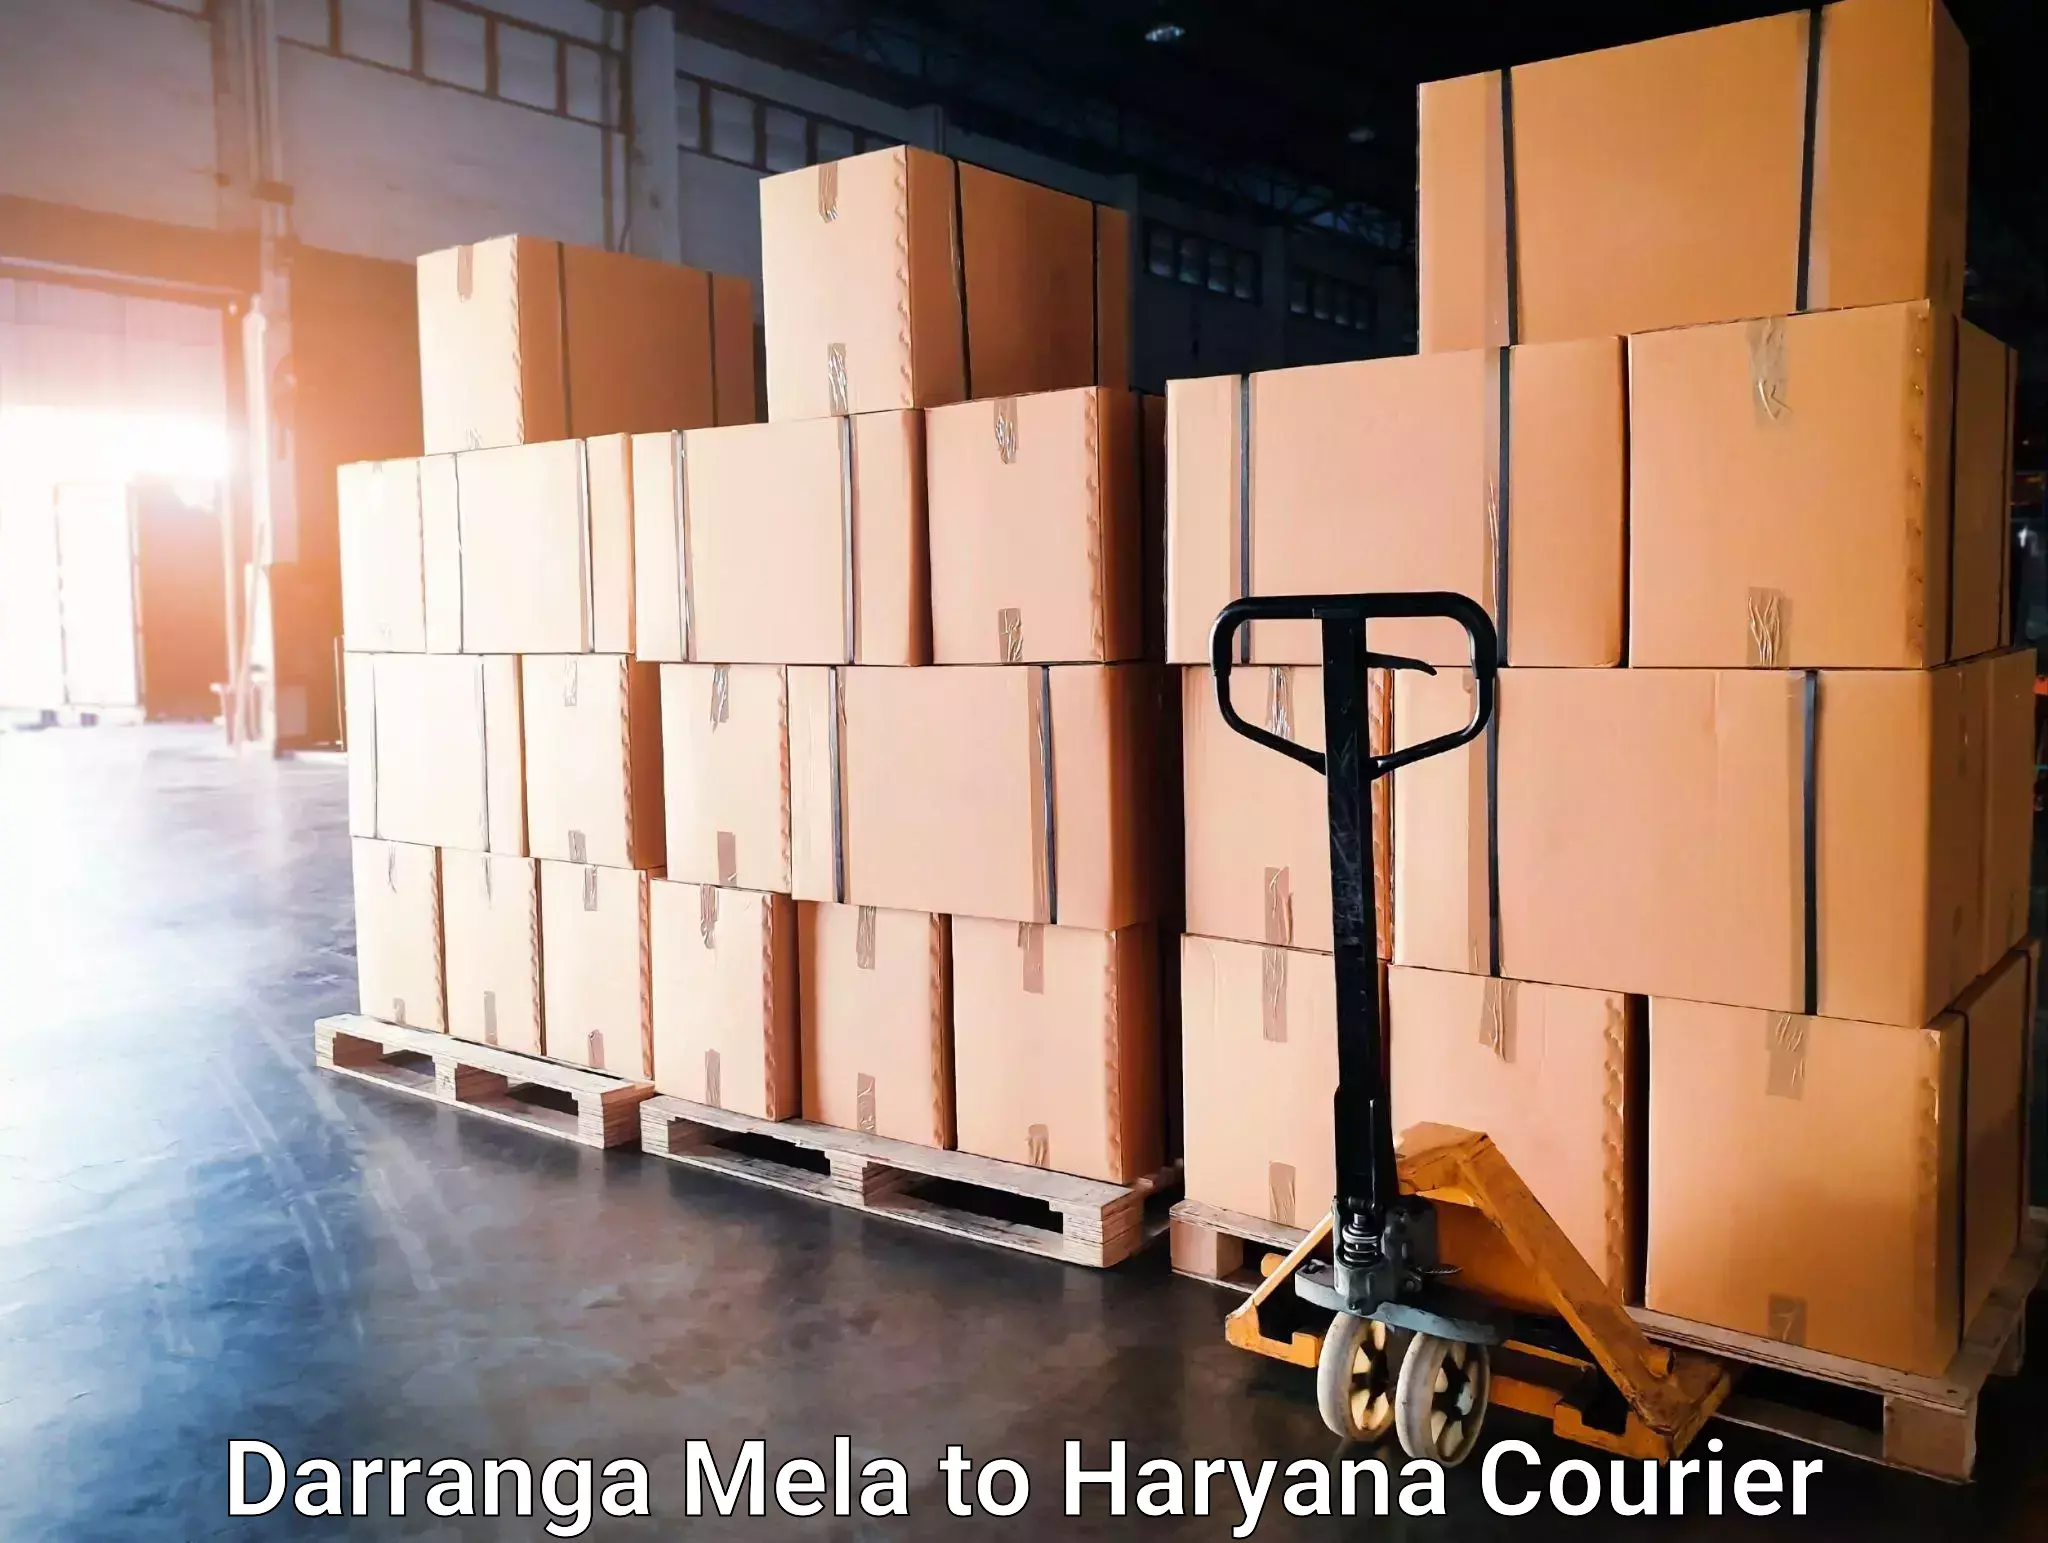 Express mail solutions in Darranga Mela to Ratia